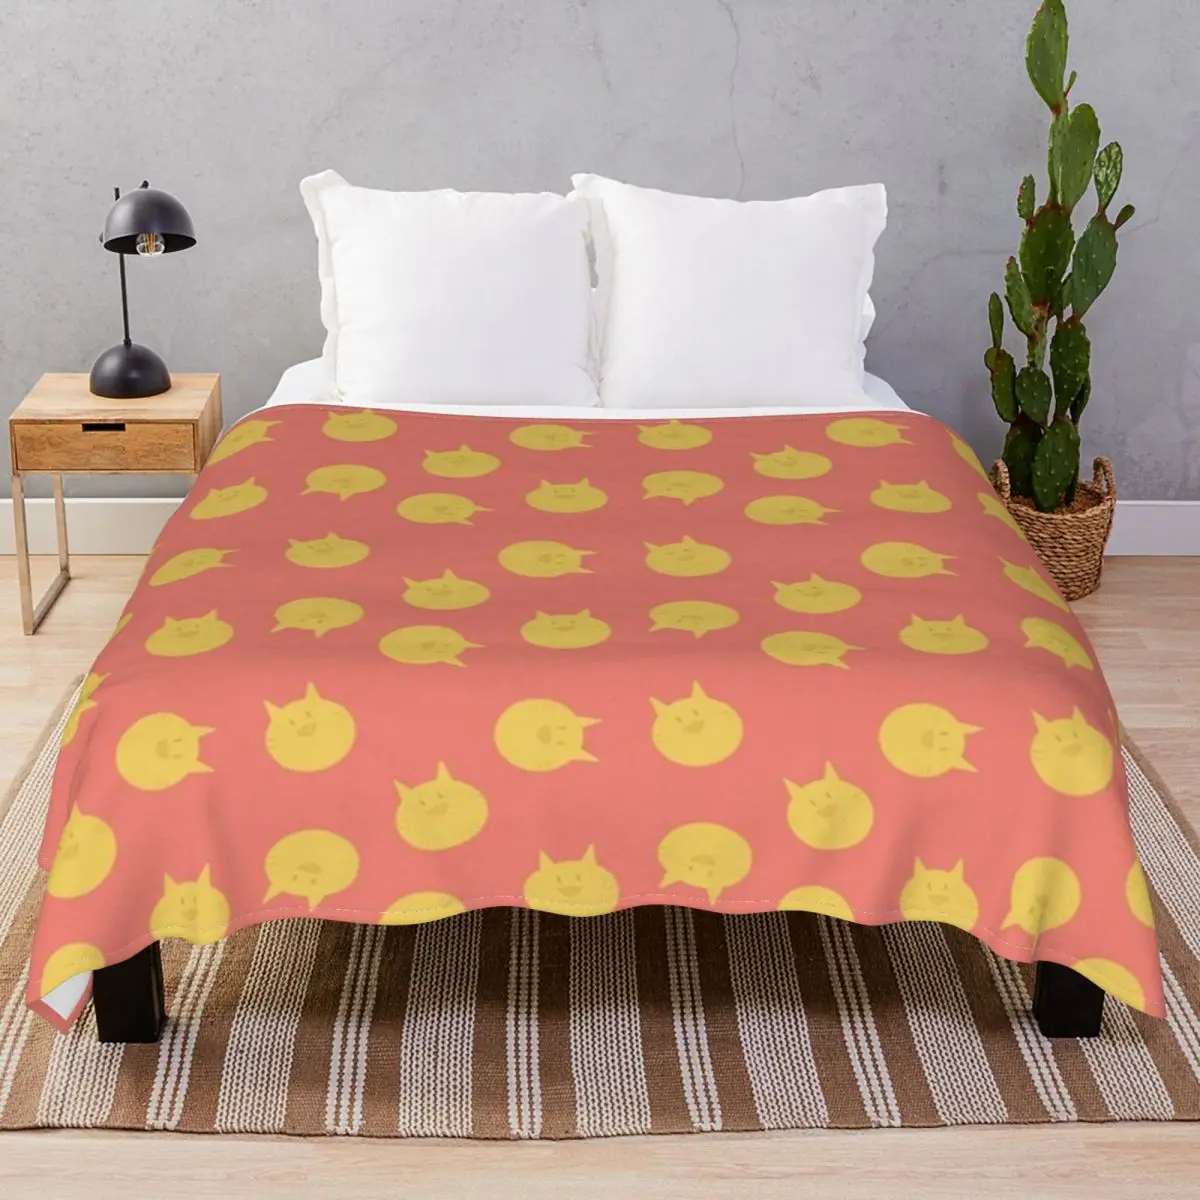 Armins Futon Blanket Flannel Spring/Autumn Soft Throw Blankets for Bedding Home Couch Camp Cinema